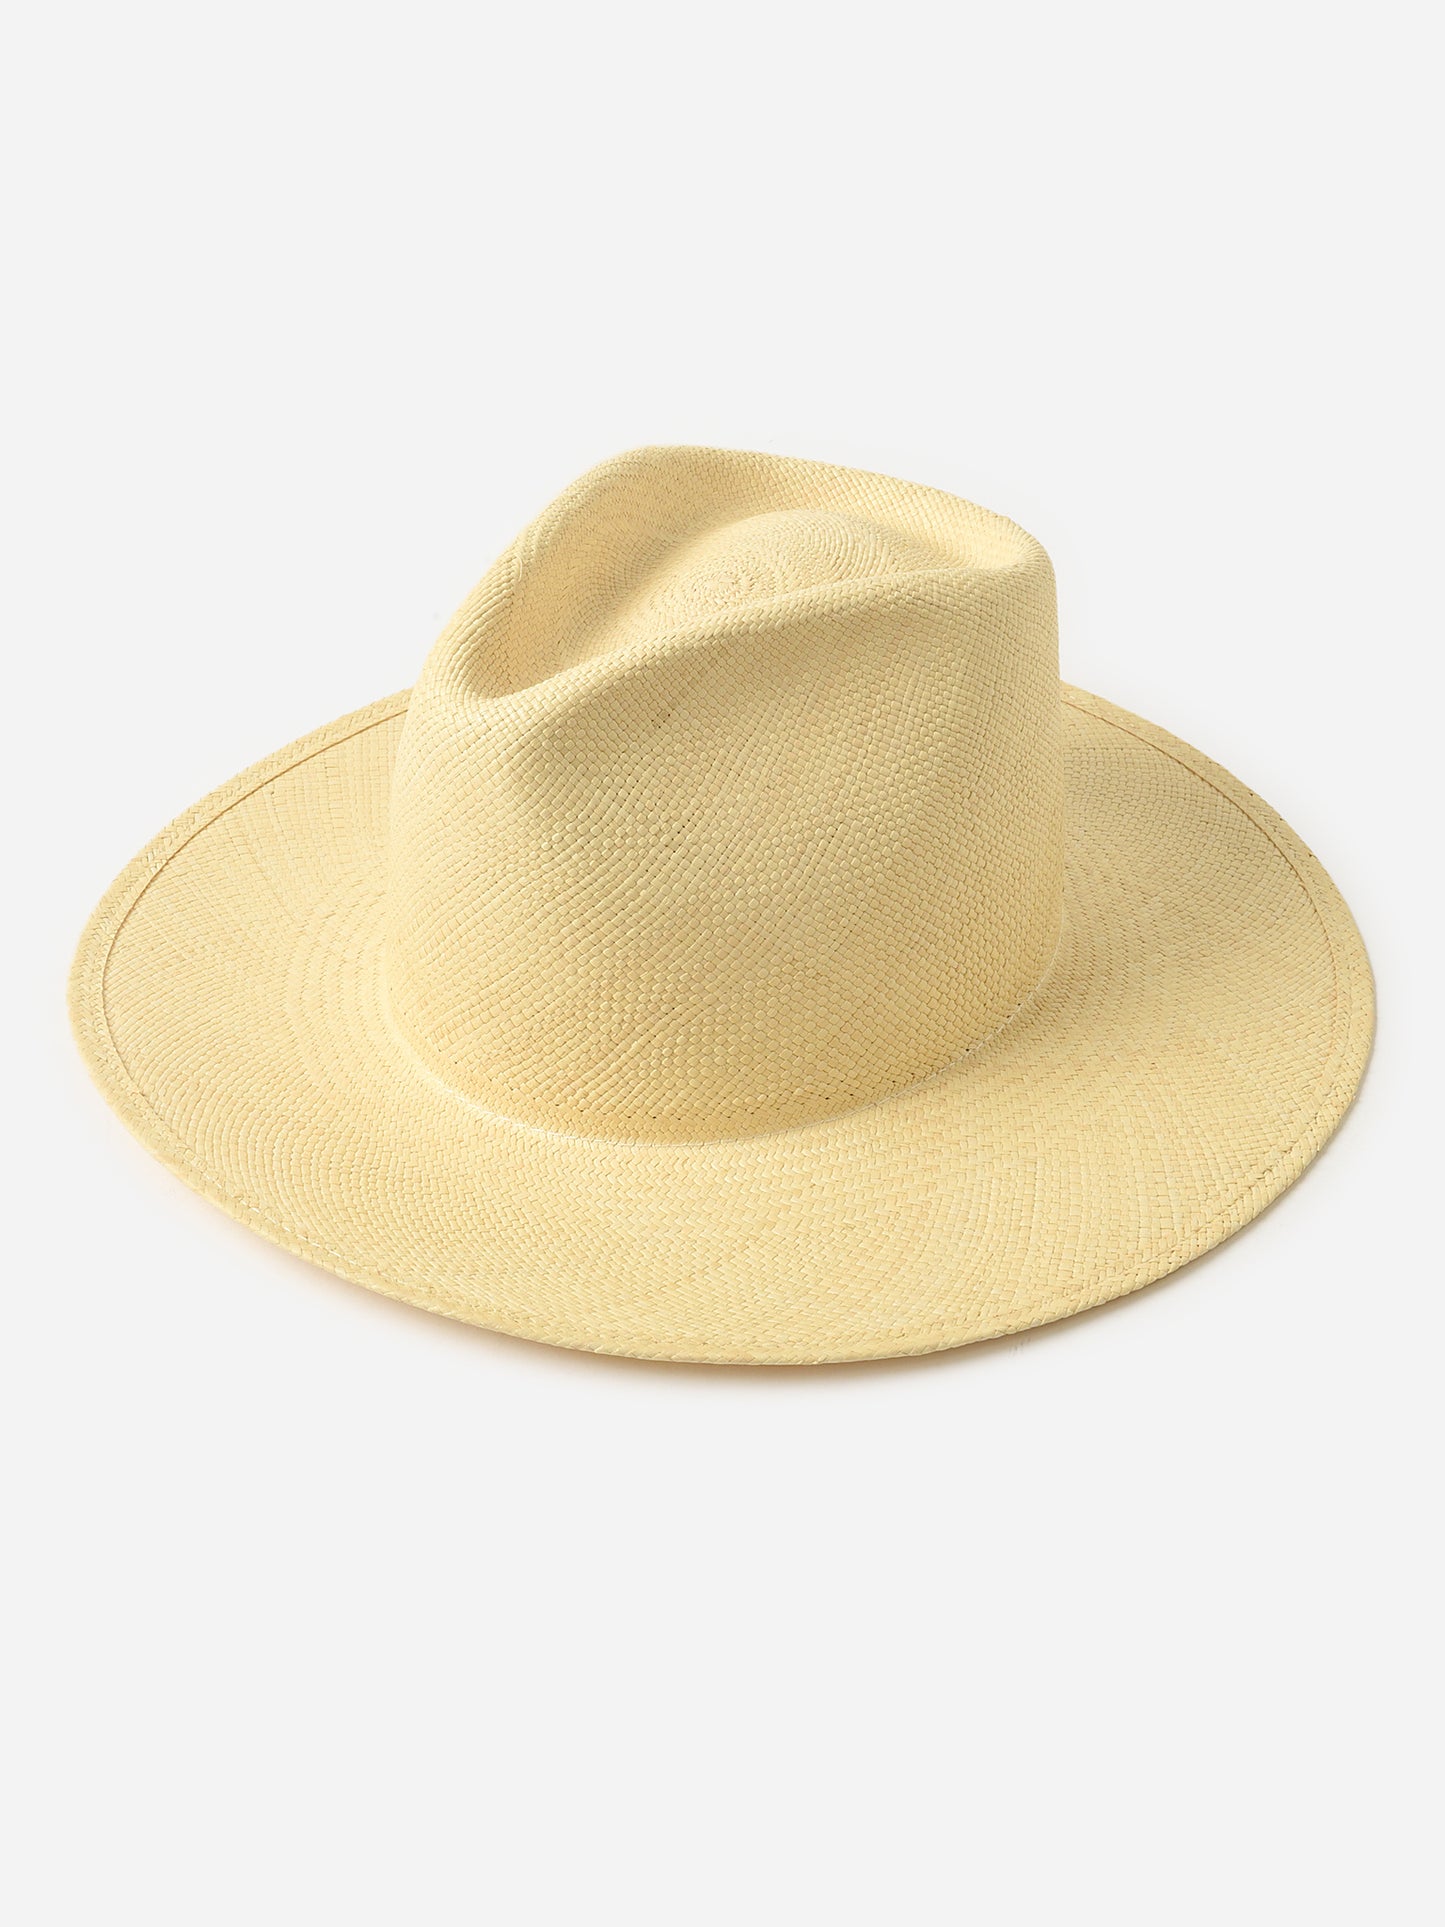 Janessa Leone Women's Greta Hat